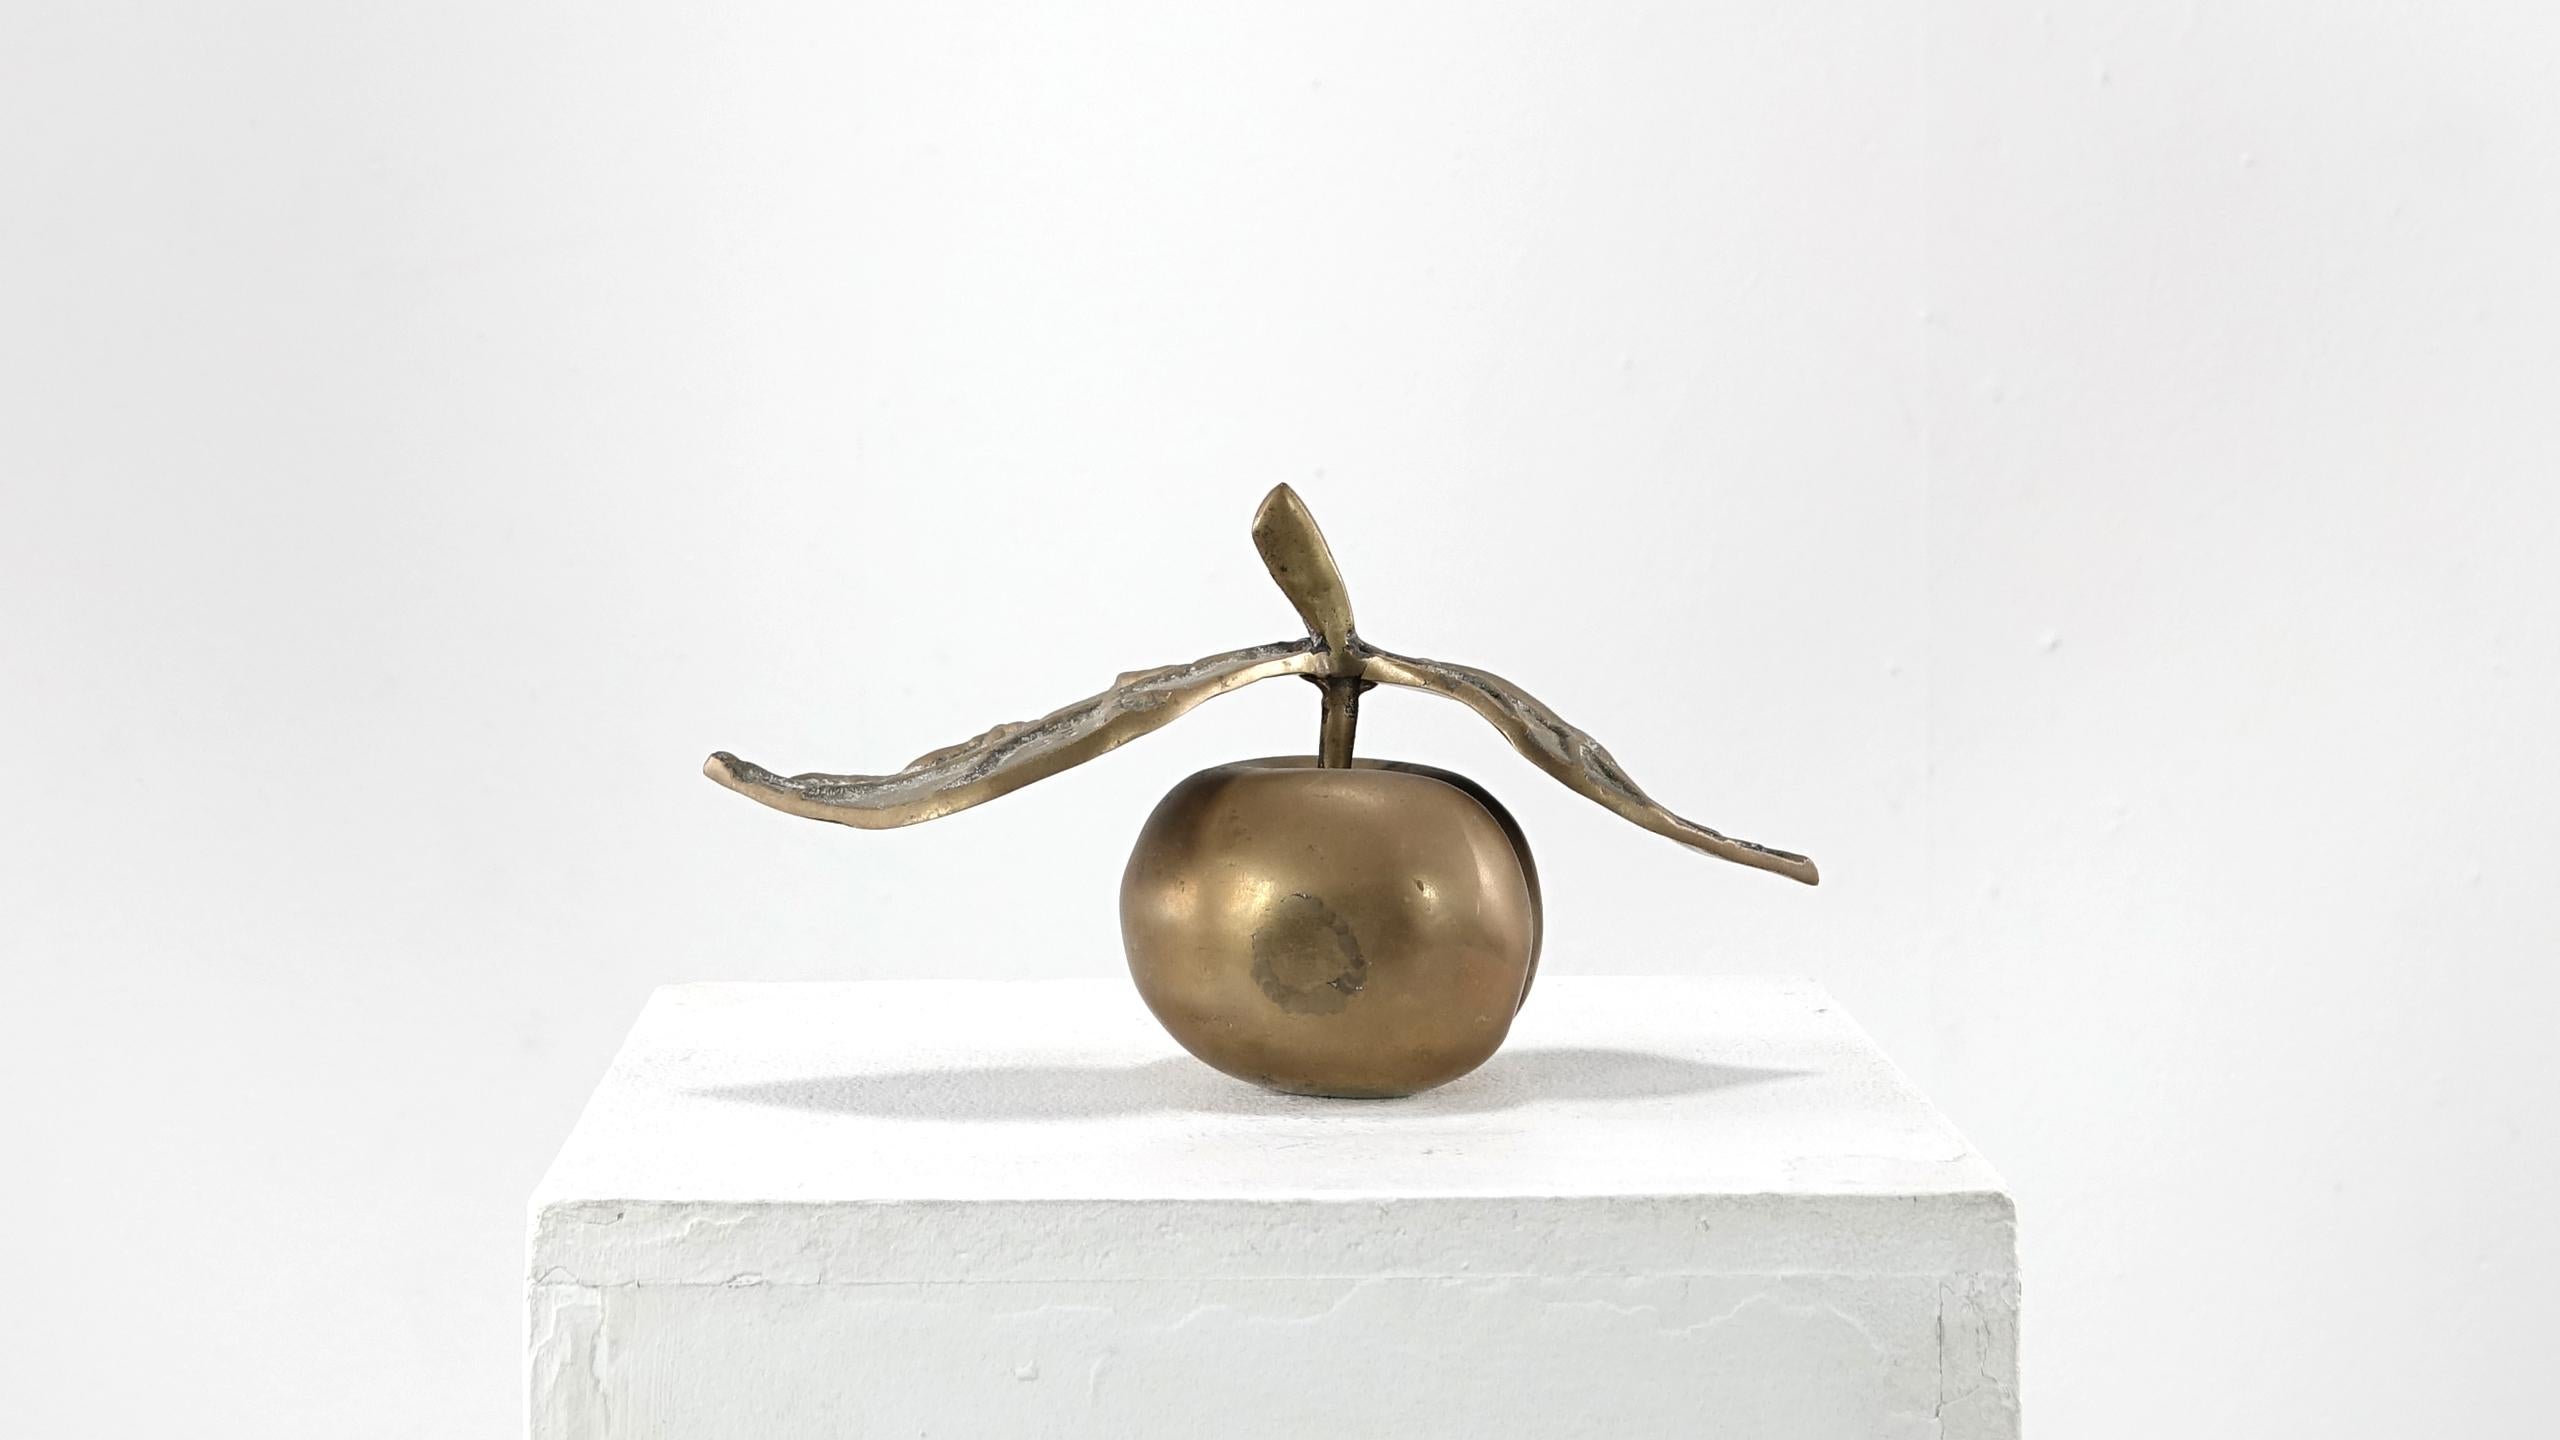 David Marshall Desenos Brass Apple Sculpture 2